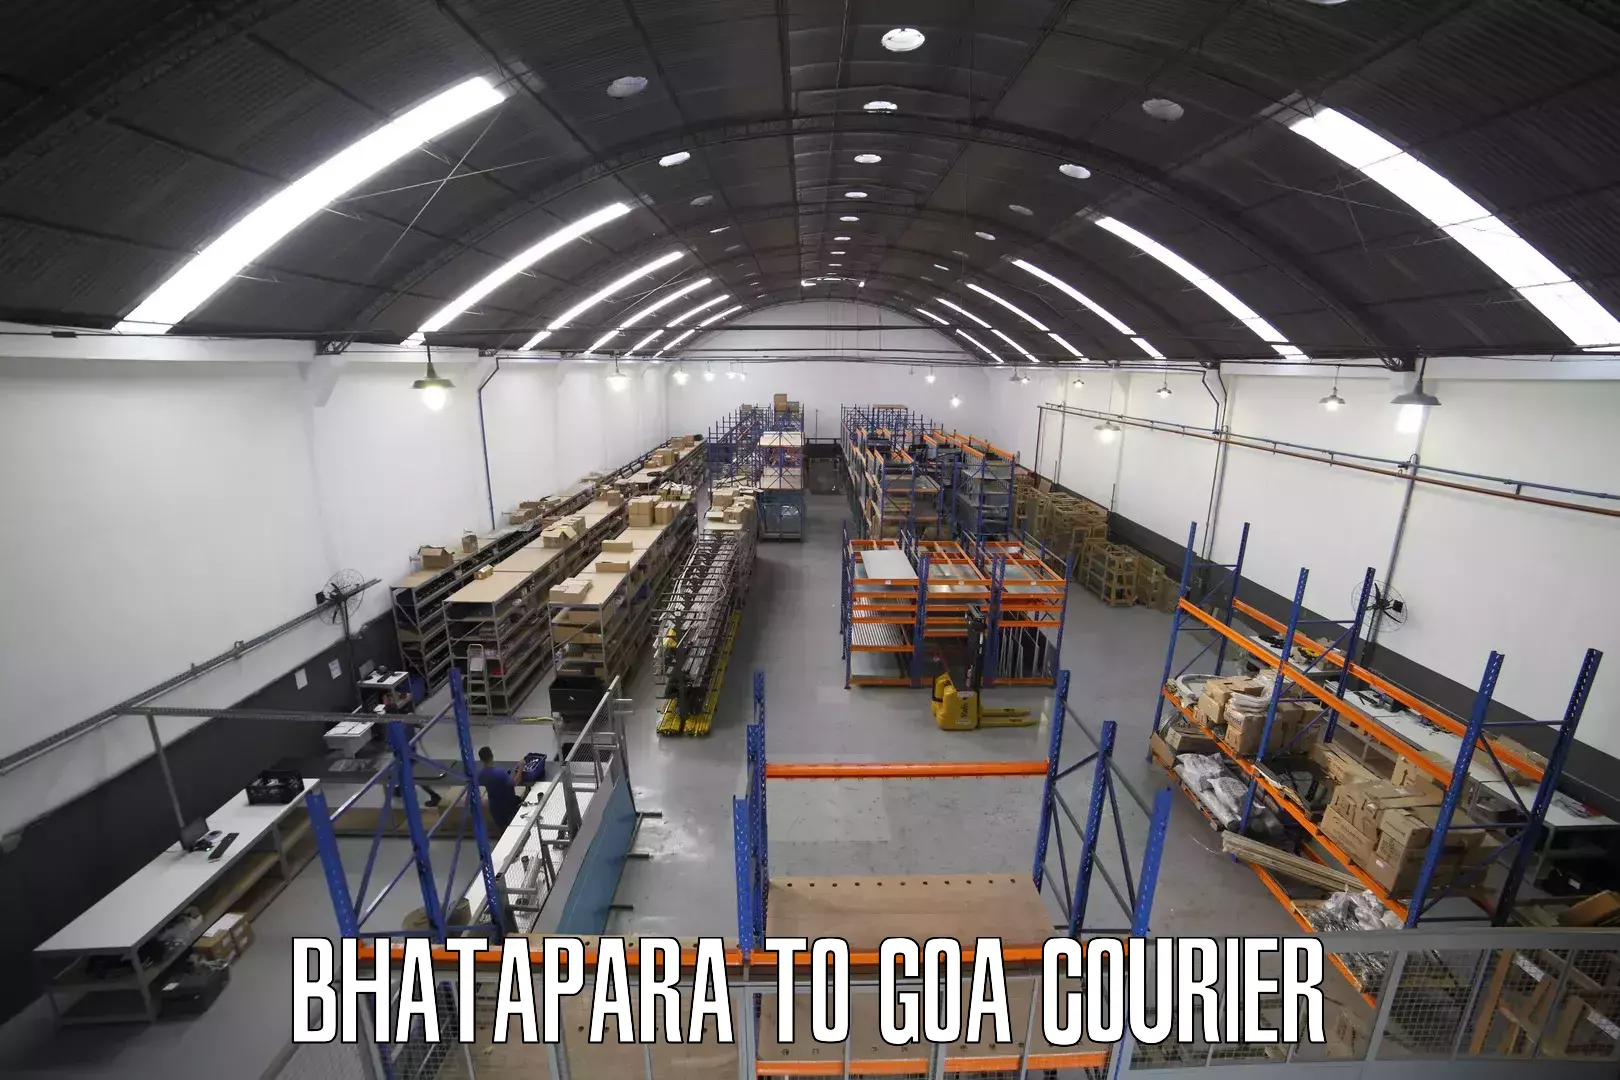 Global courier networks Bhatapara to South Goa